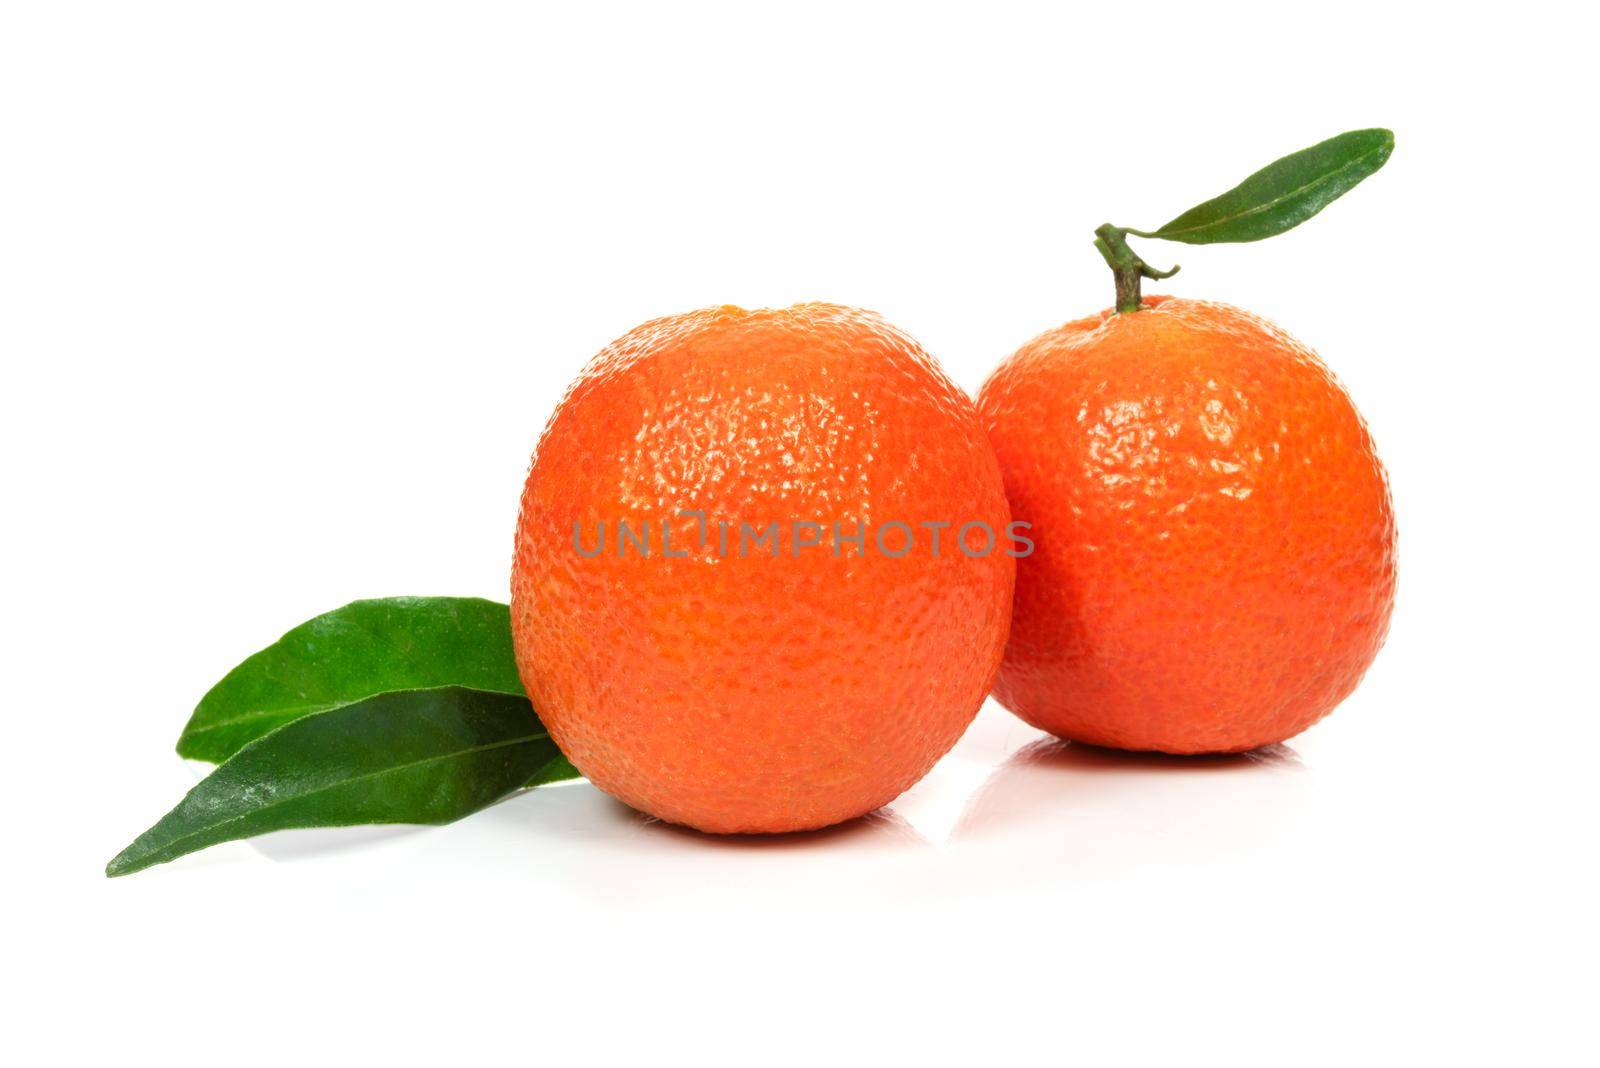 Two fresh orange fruits by wdnet_studio